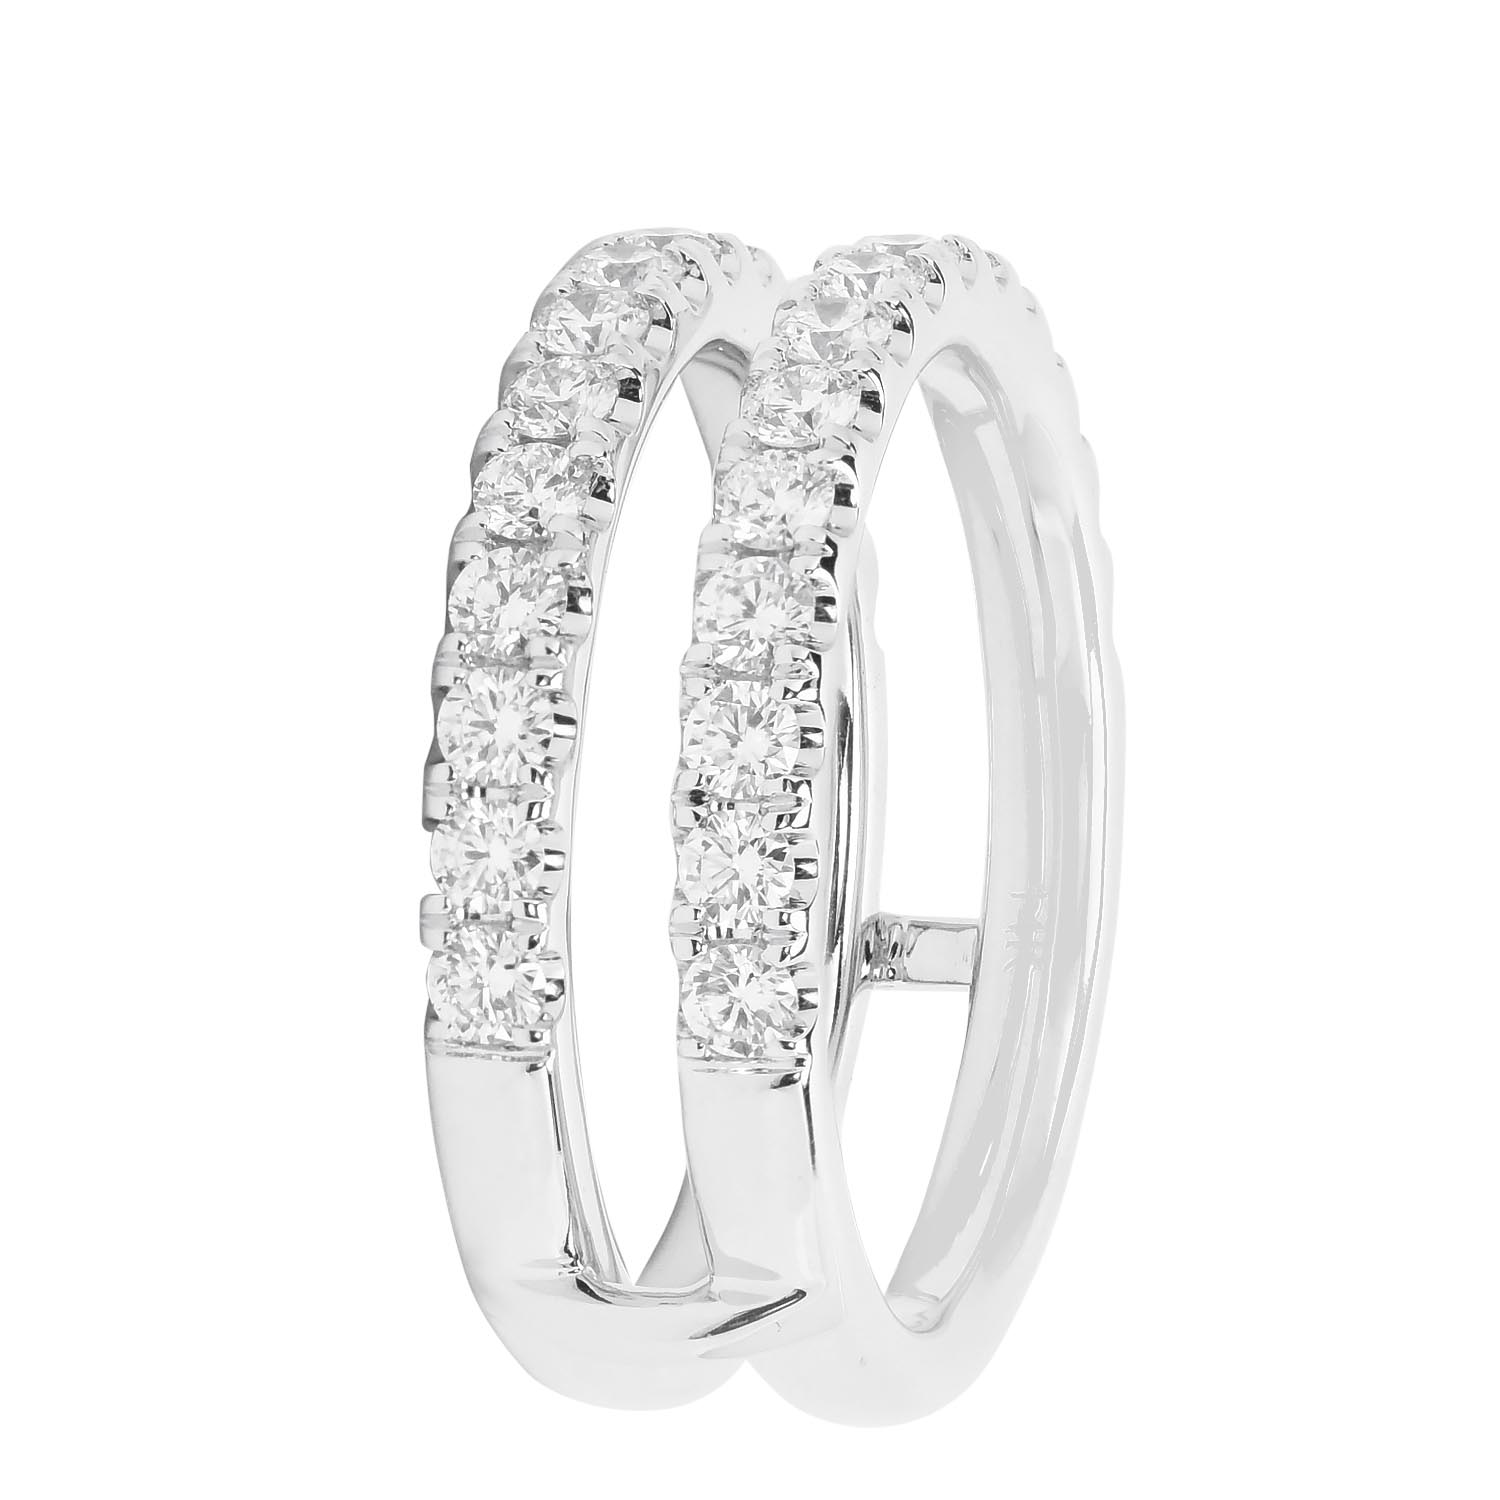 Diamond Wedding Ring Insert in 14kt White Gold (1ct tw)